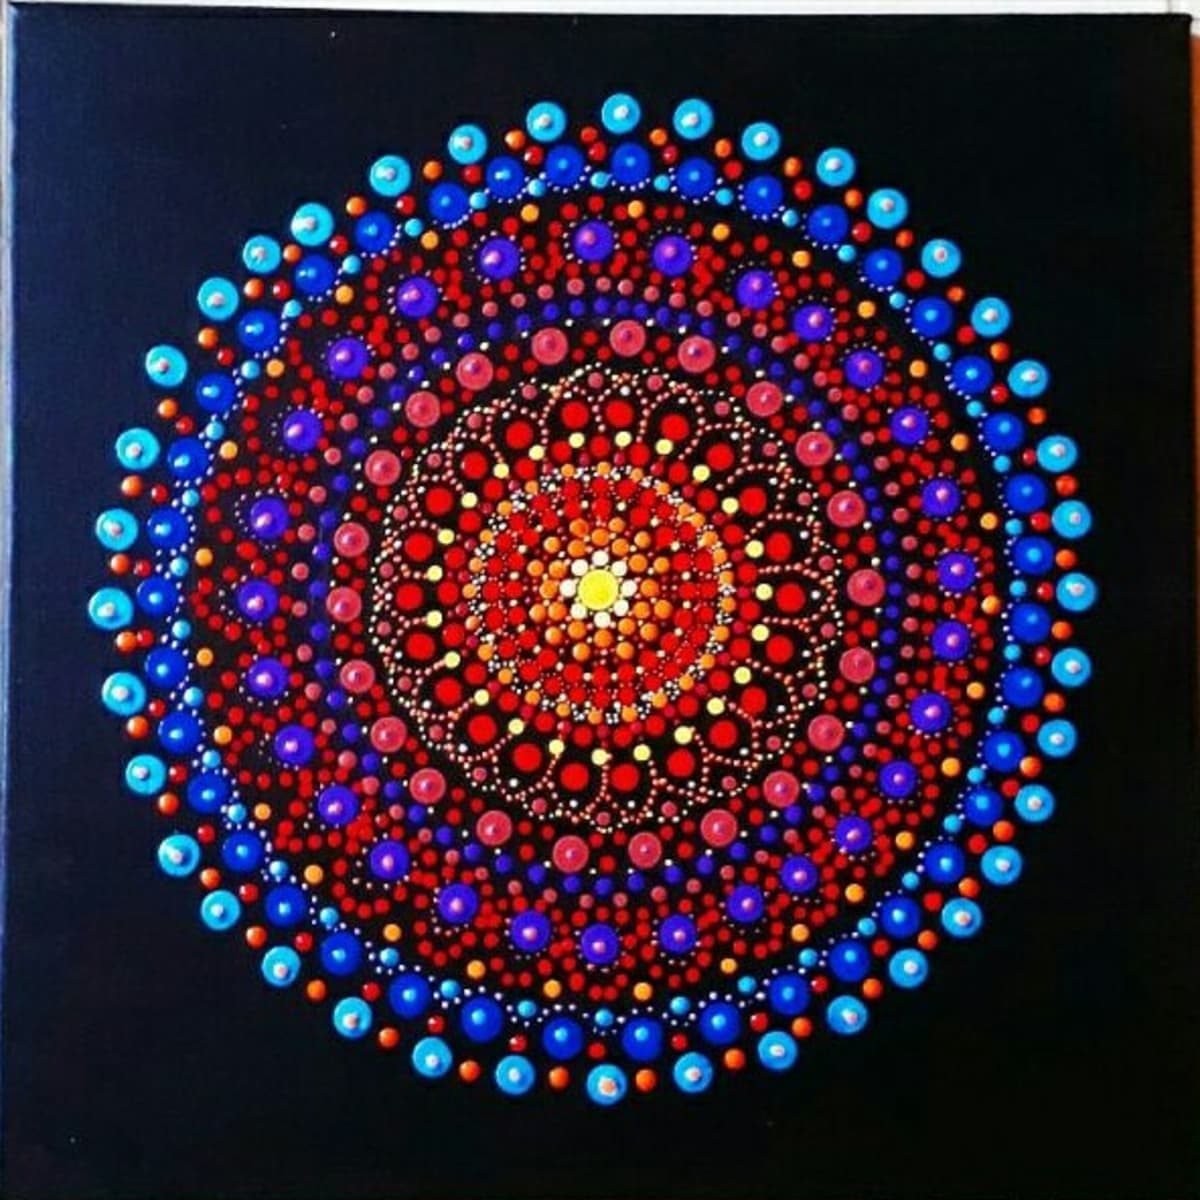 Dot mandala - dot painting